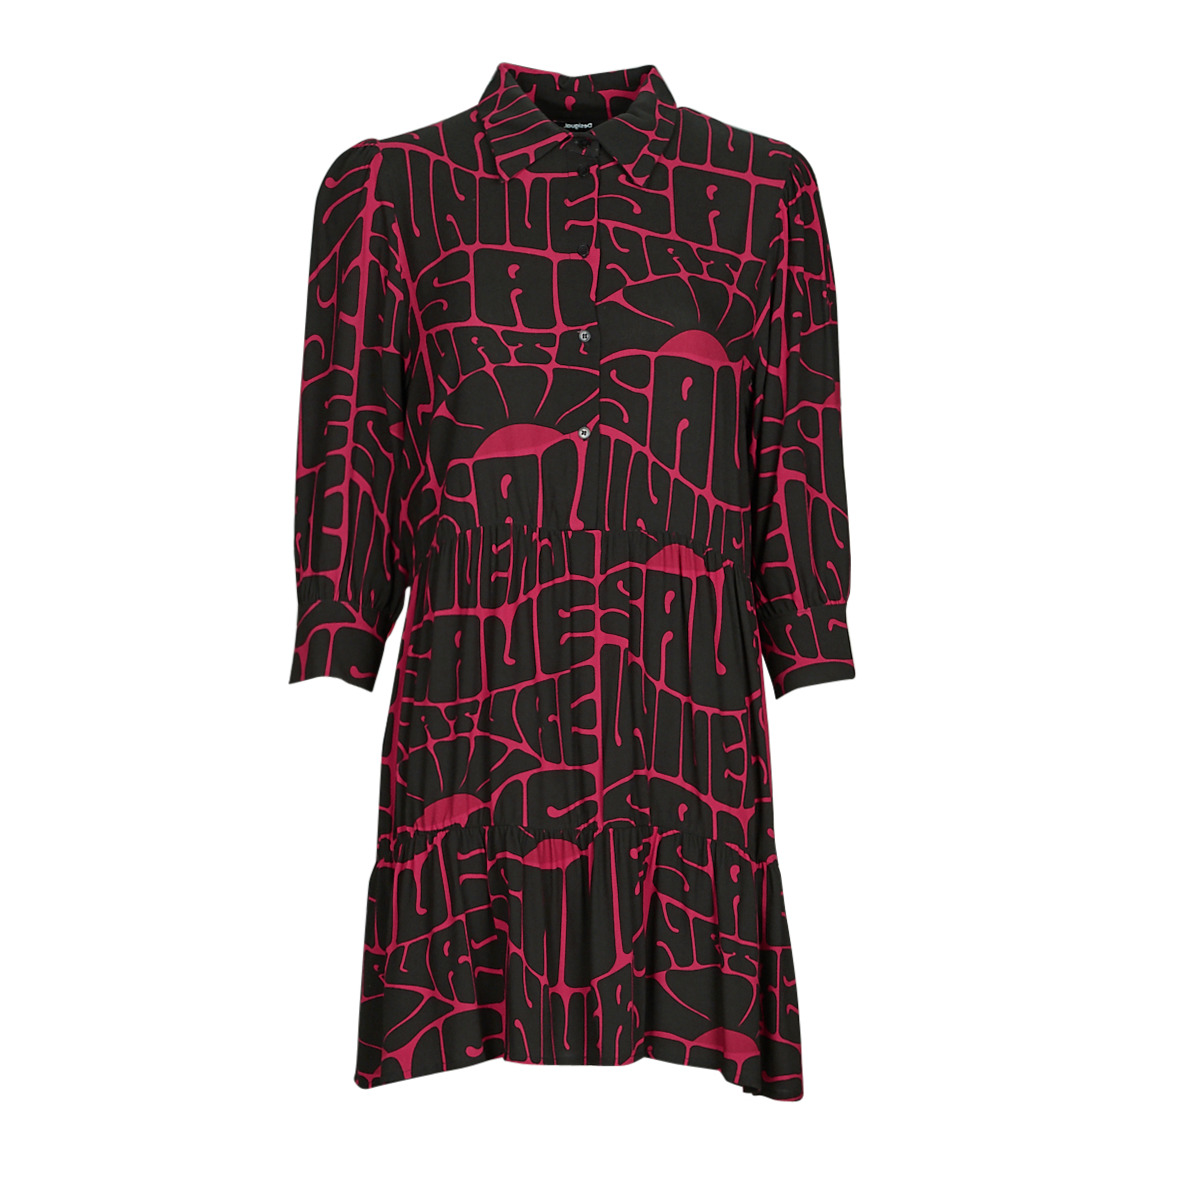 Desigual CIRA Black / Pink - Clothing Short Dresses Women 79,20 €